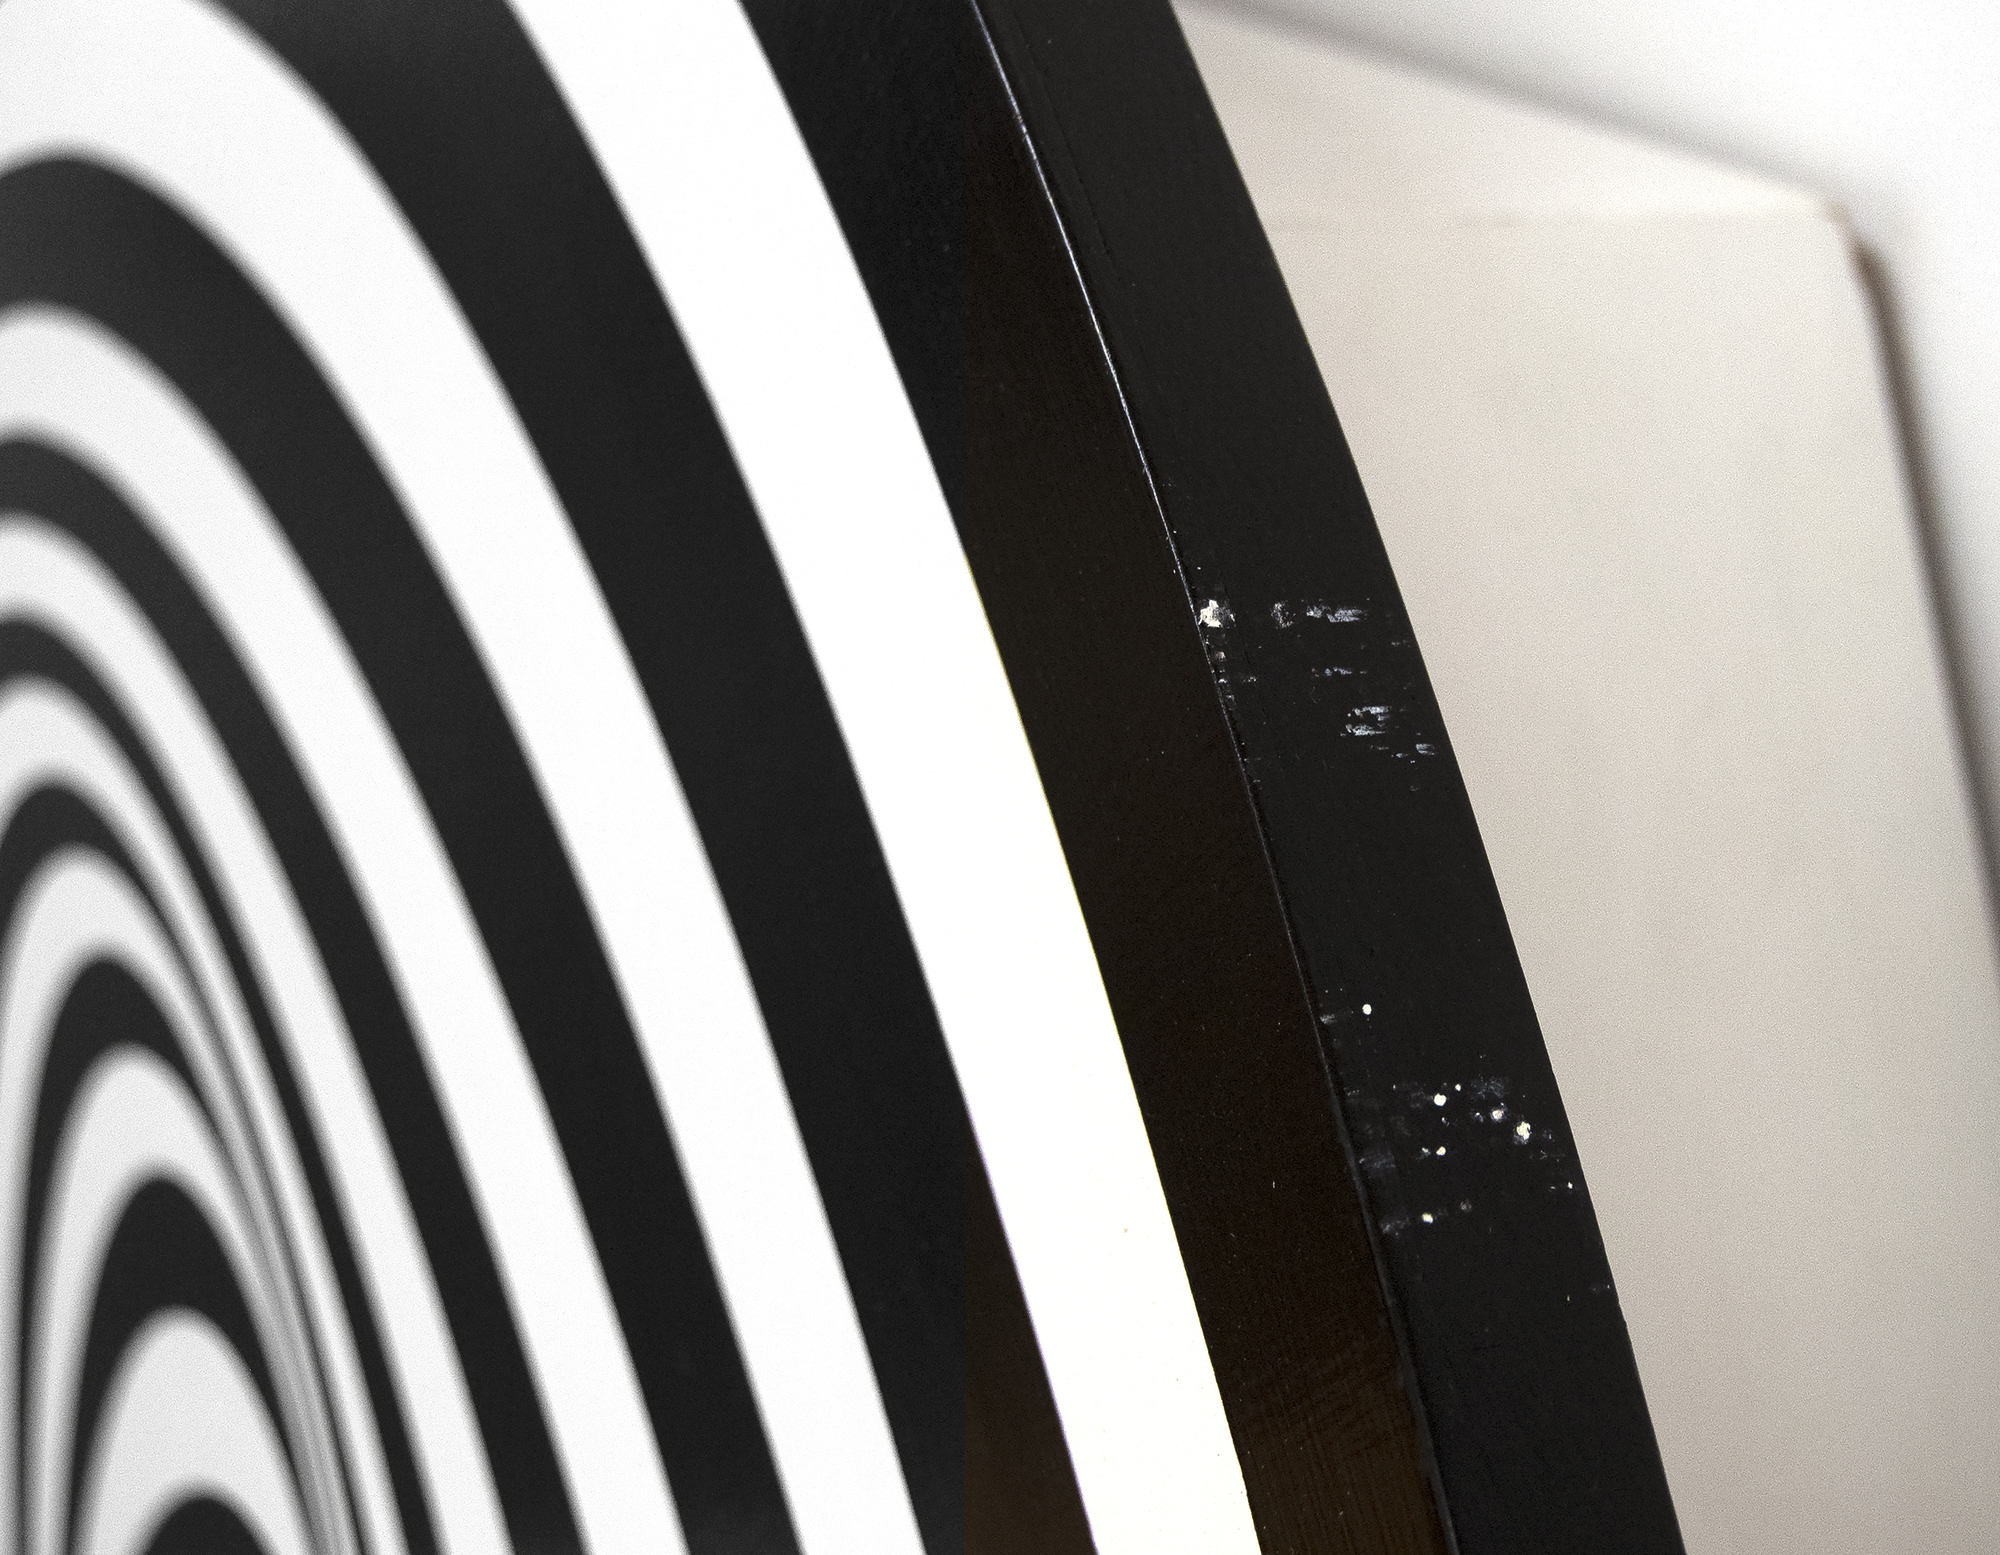 FRANCIS CELENTANO - Elliptical Kinetic Painting - acrylic on masonite - 48 x 48 x 6 1/2 in.